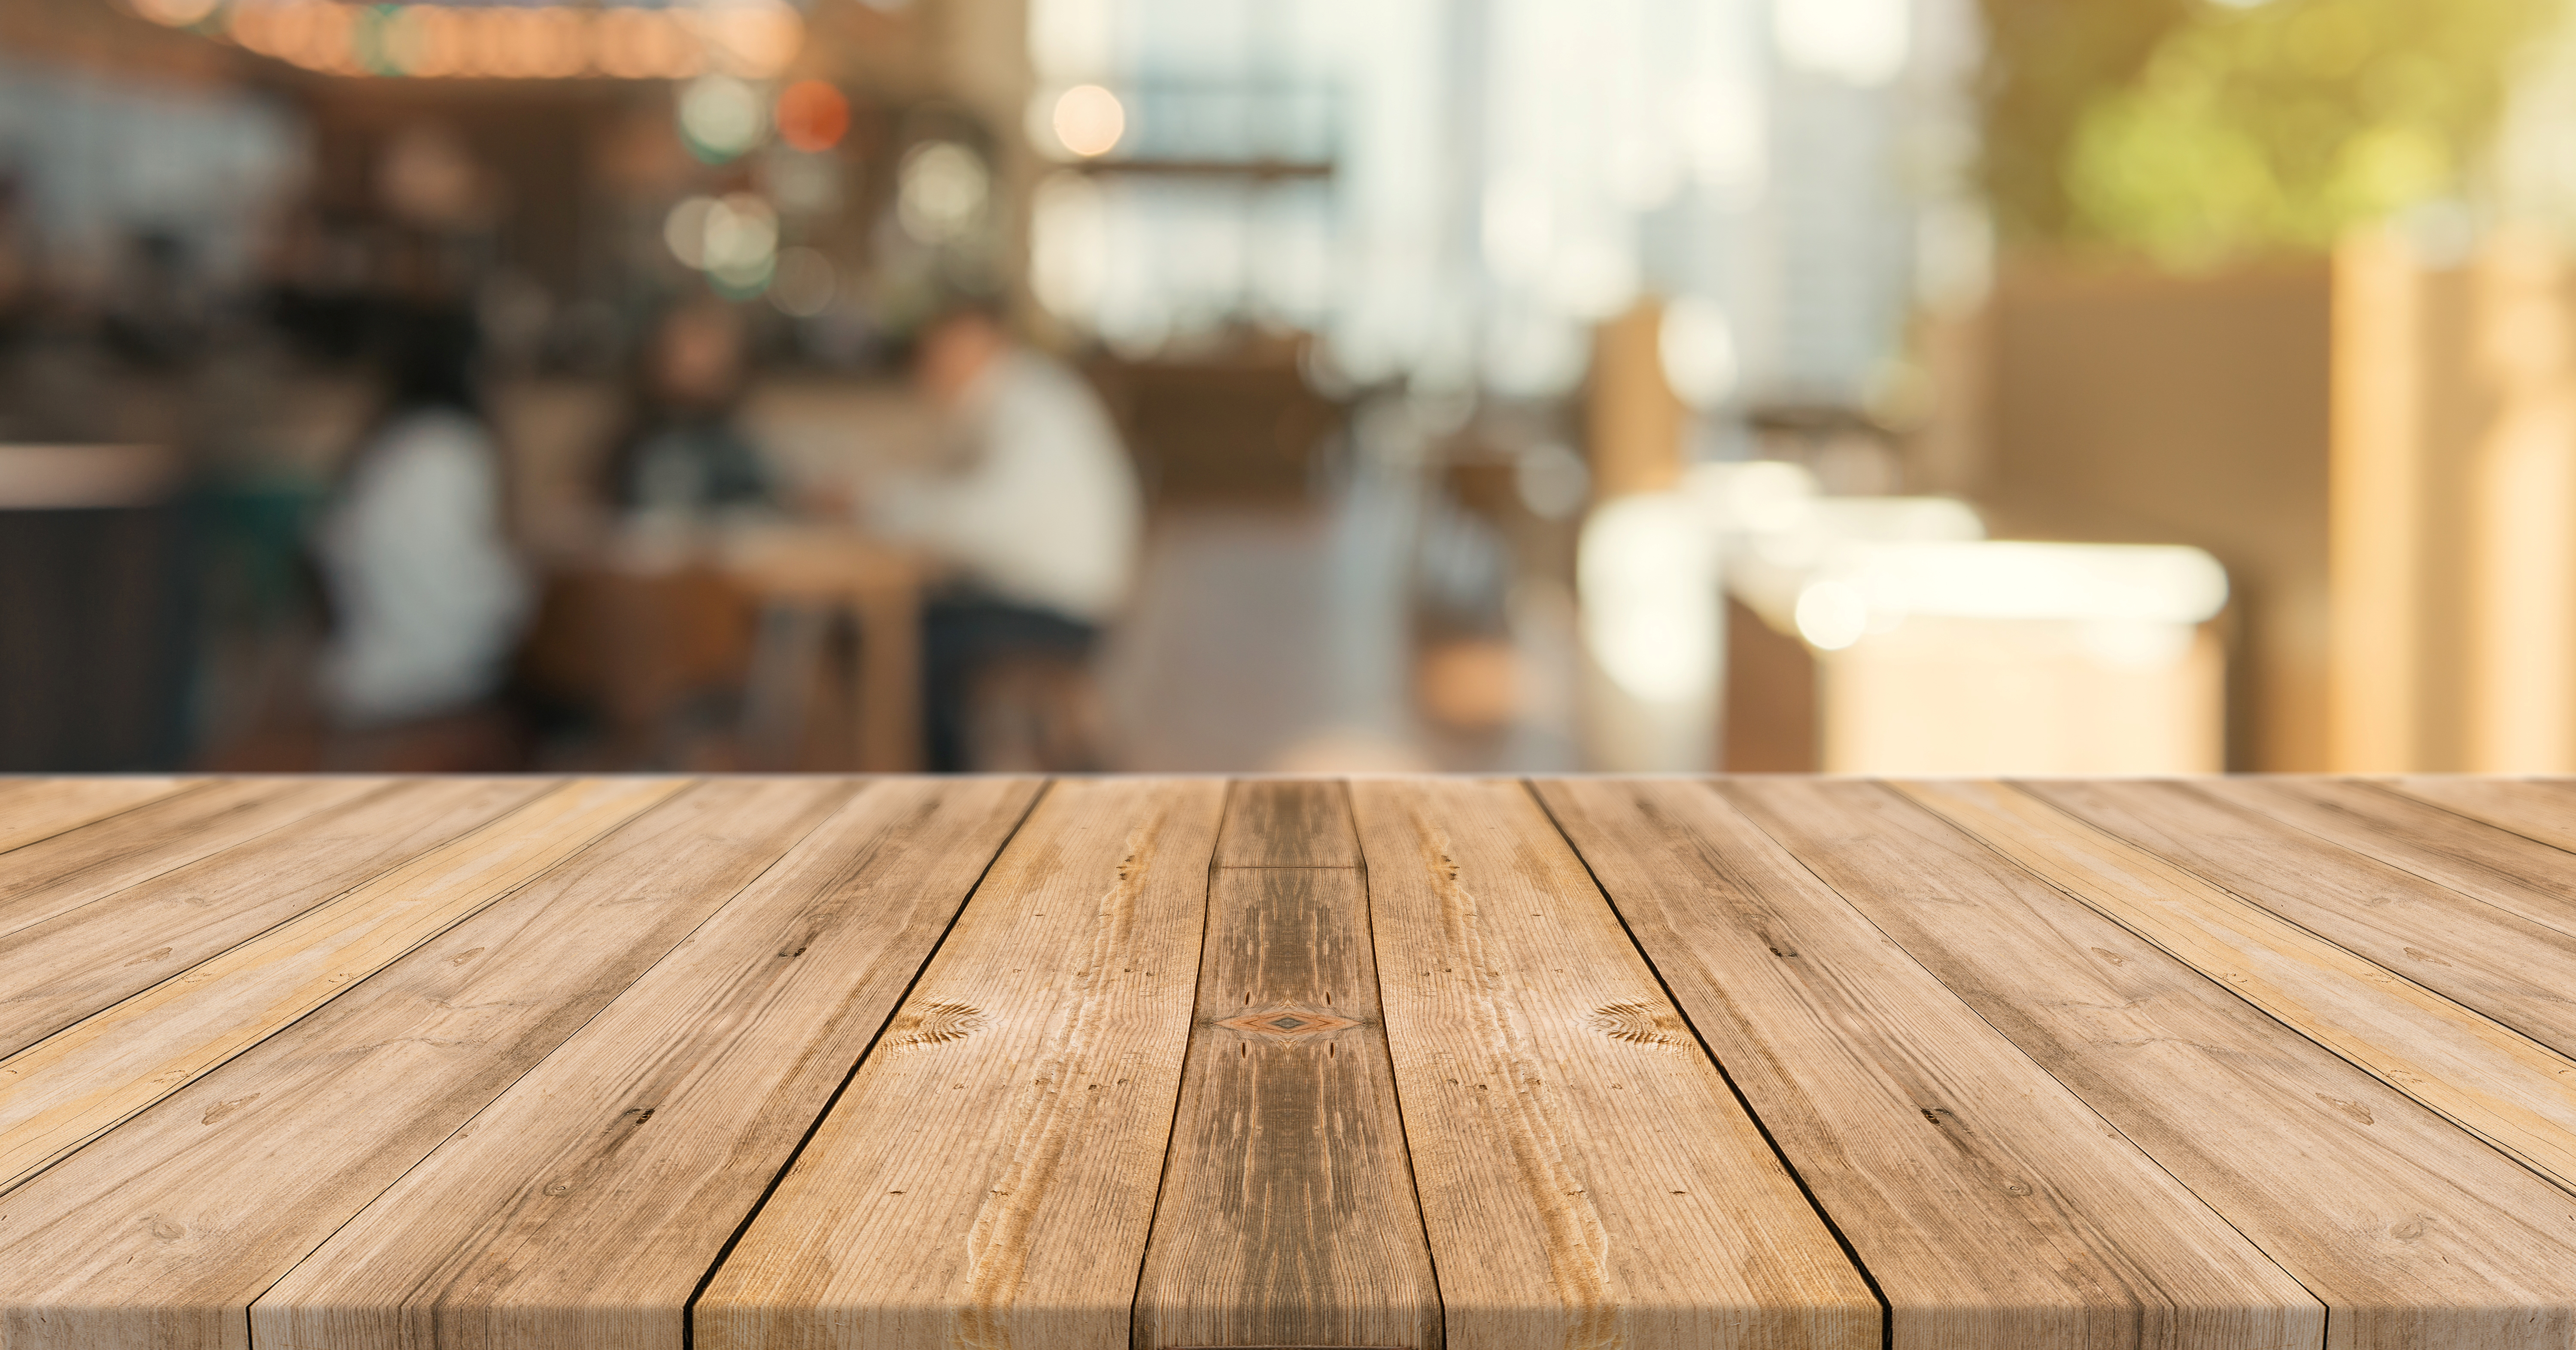 Внутренняя поверхность стола. Поверхность стола. Деревянная поверхность стола. Стол деревянный. Деревянный стол фон.